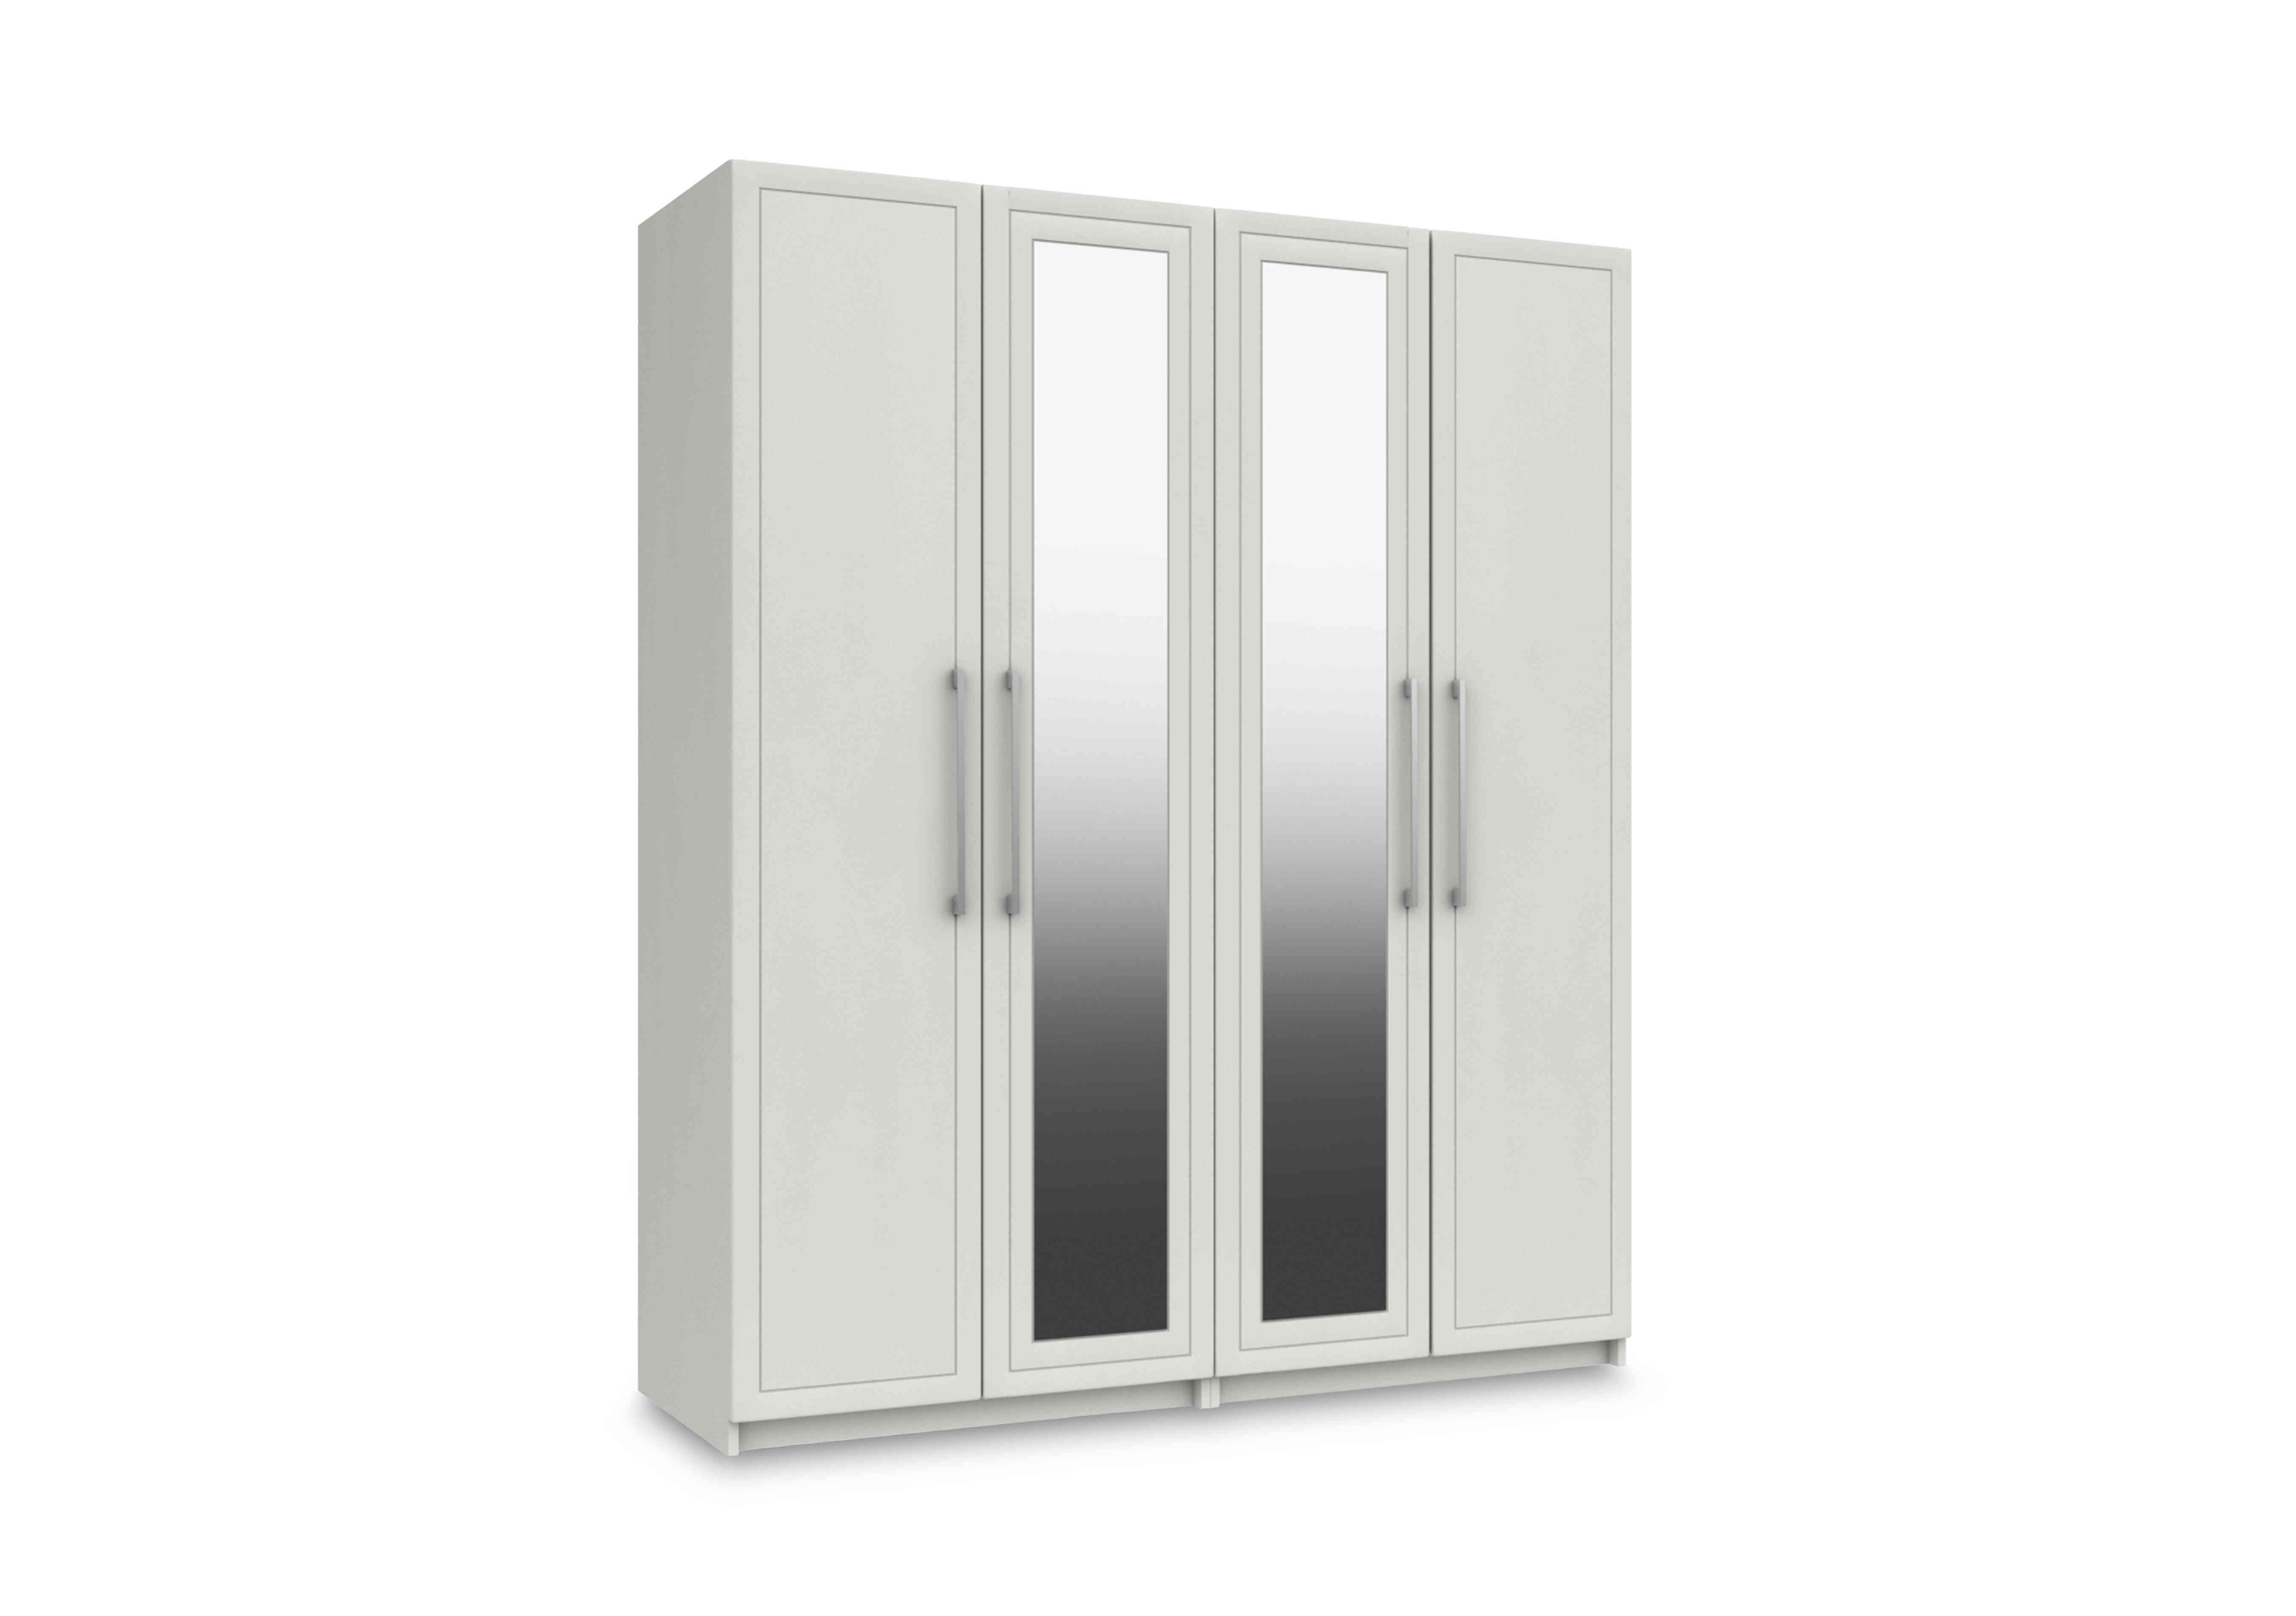 Bexley 4 Door Wardrobe With 2 Mirror Doors in White Gloss on Furniture Village